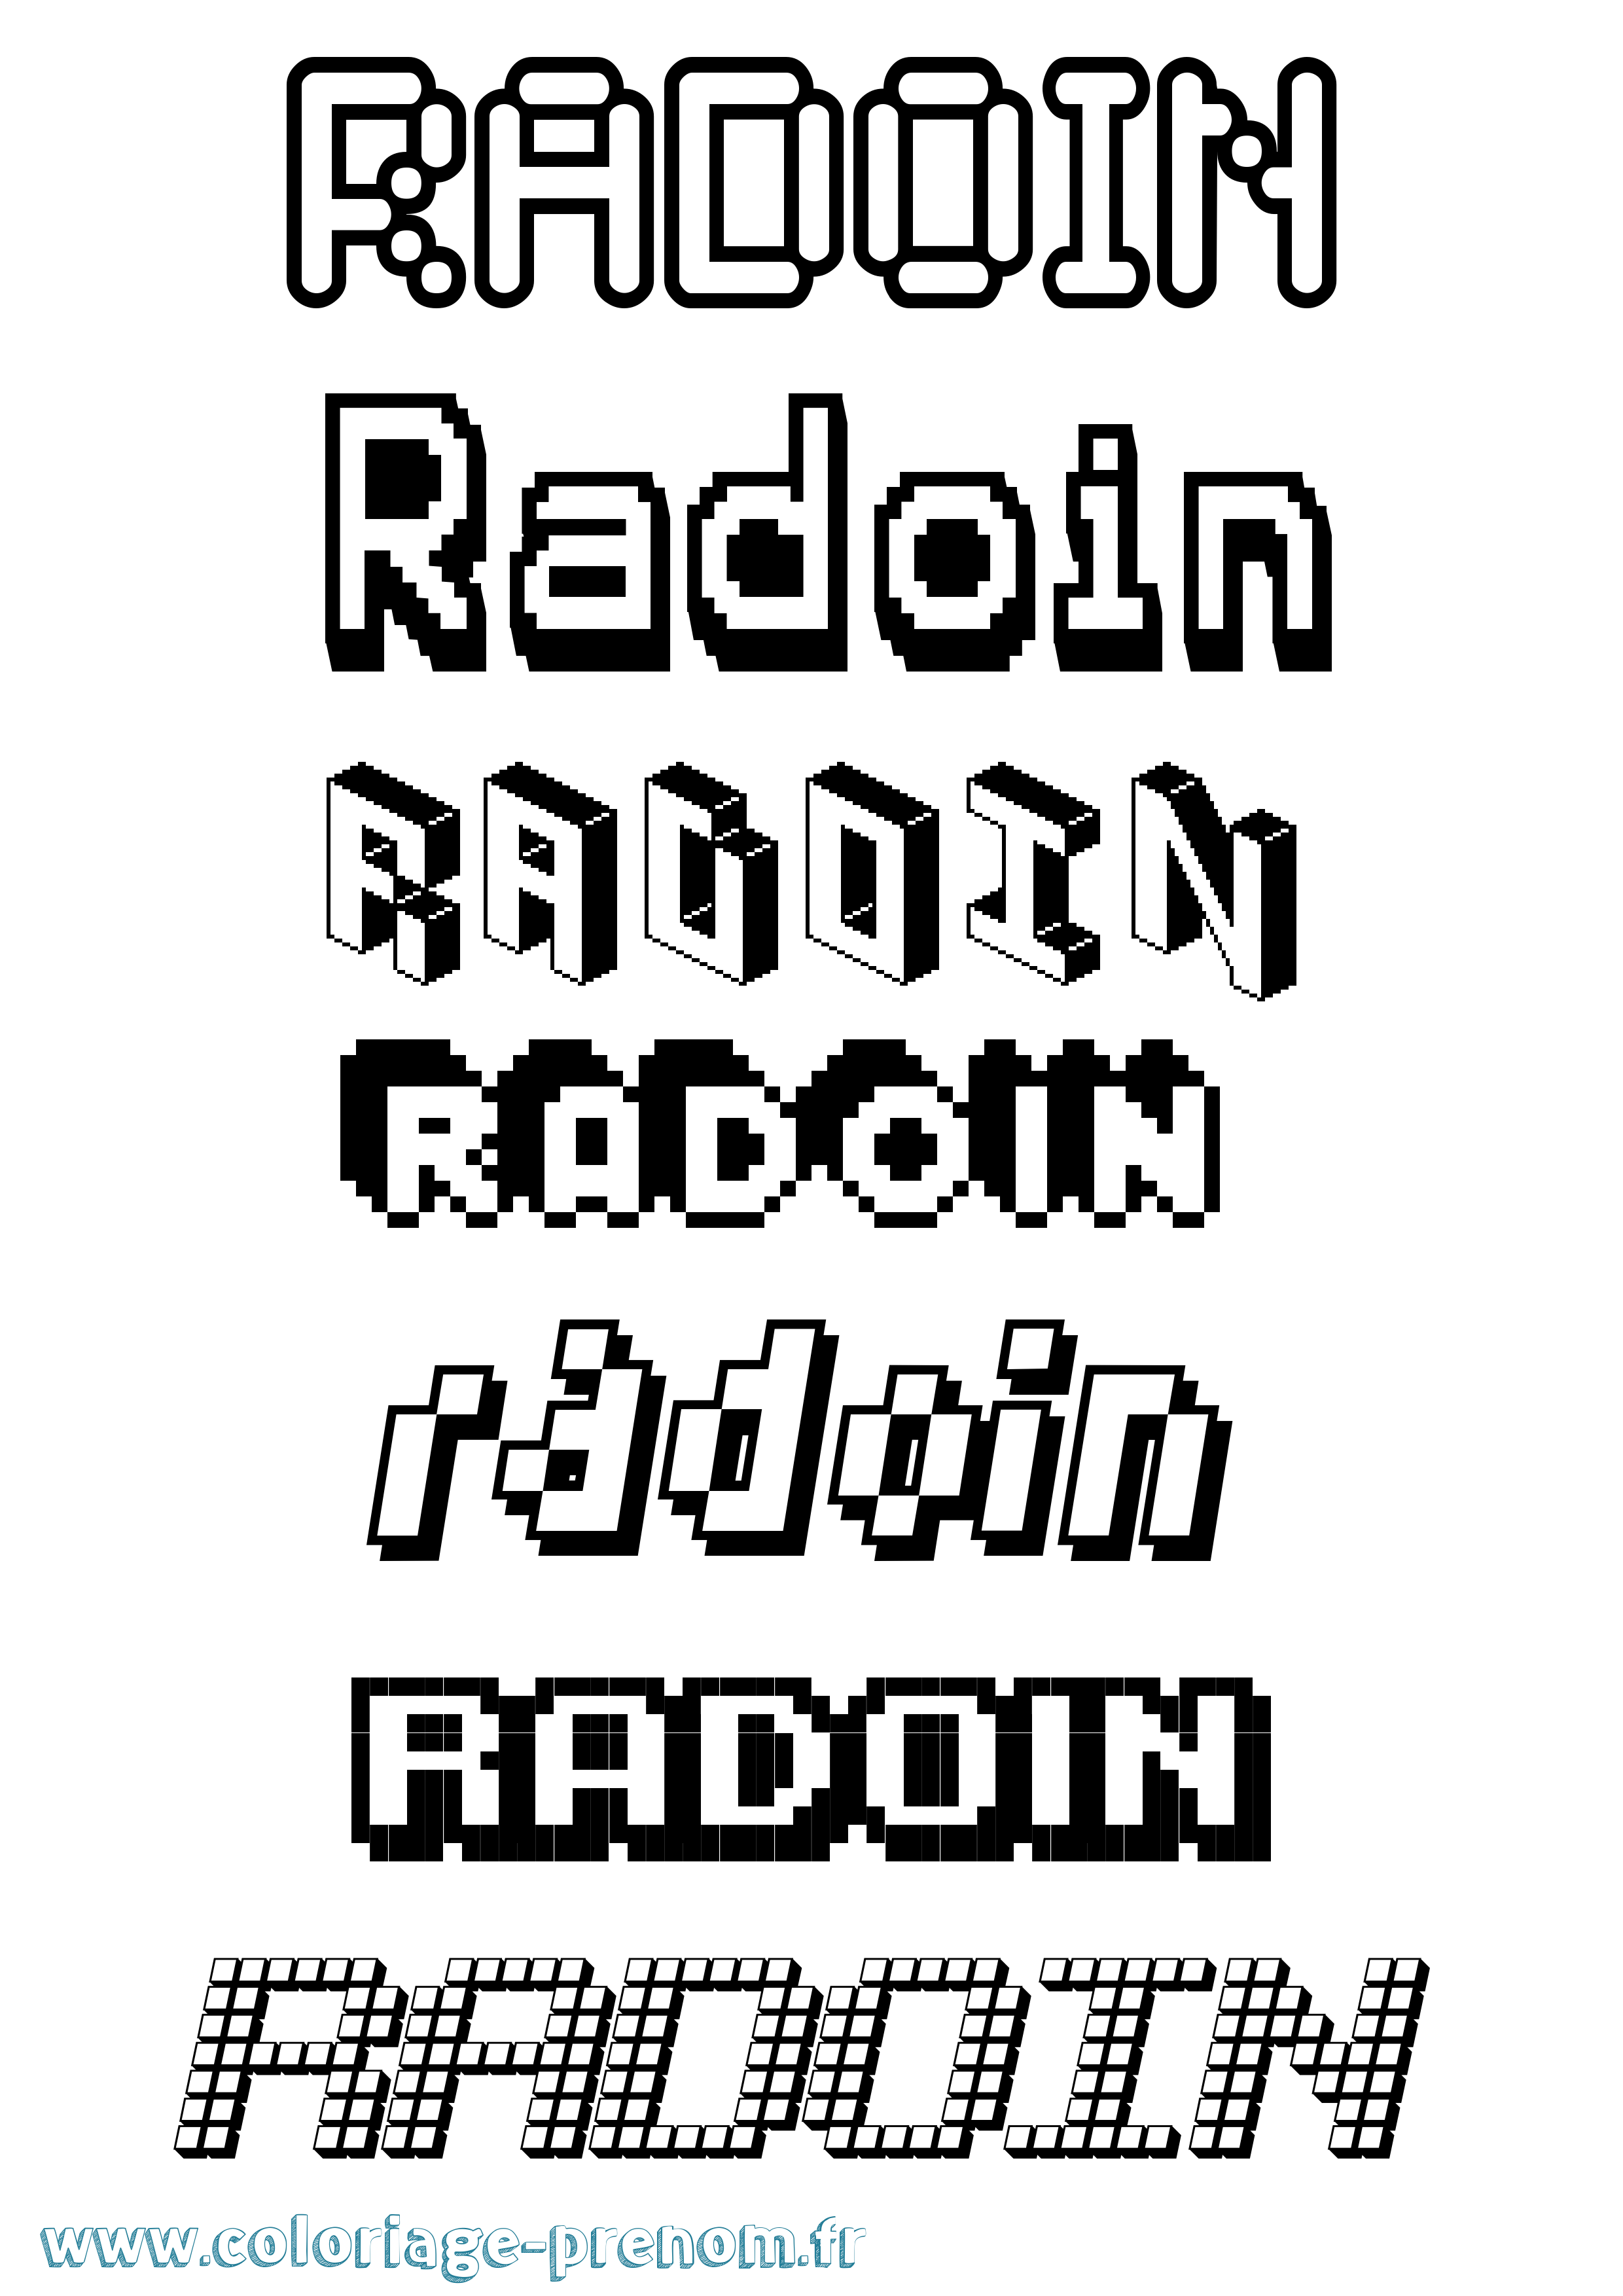 Coloriage prénom Radoin Pixel